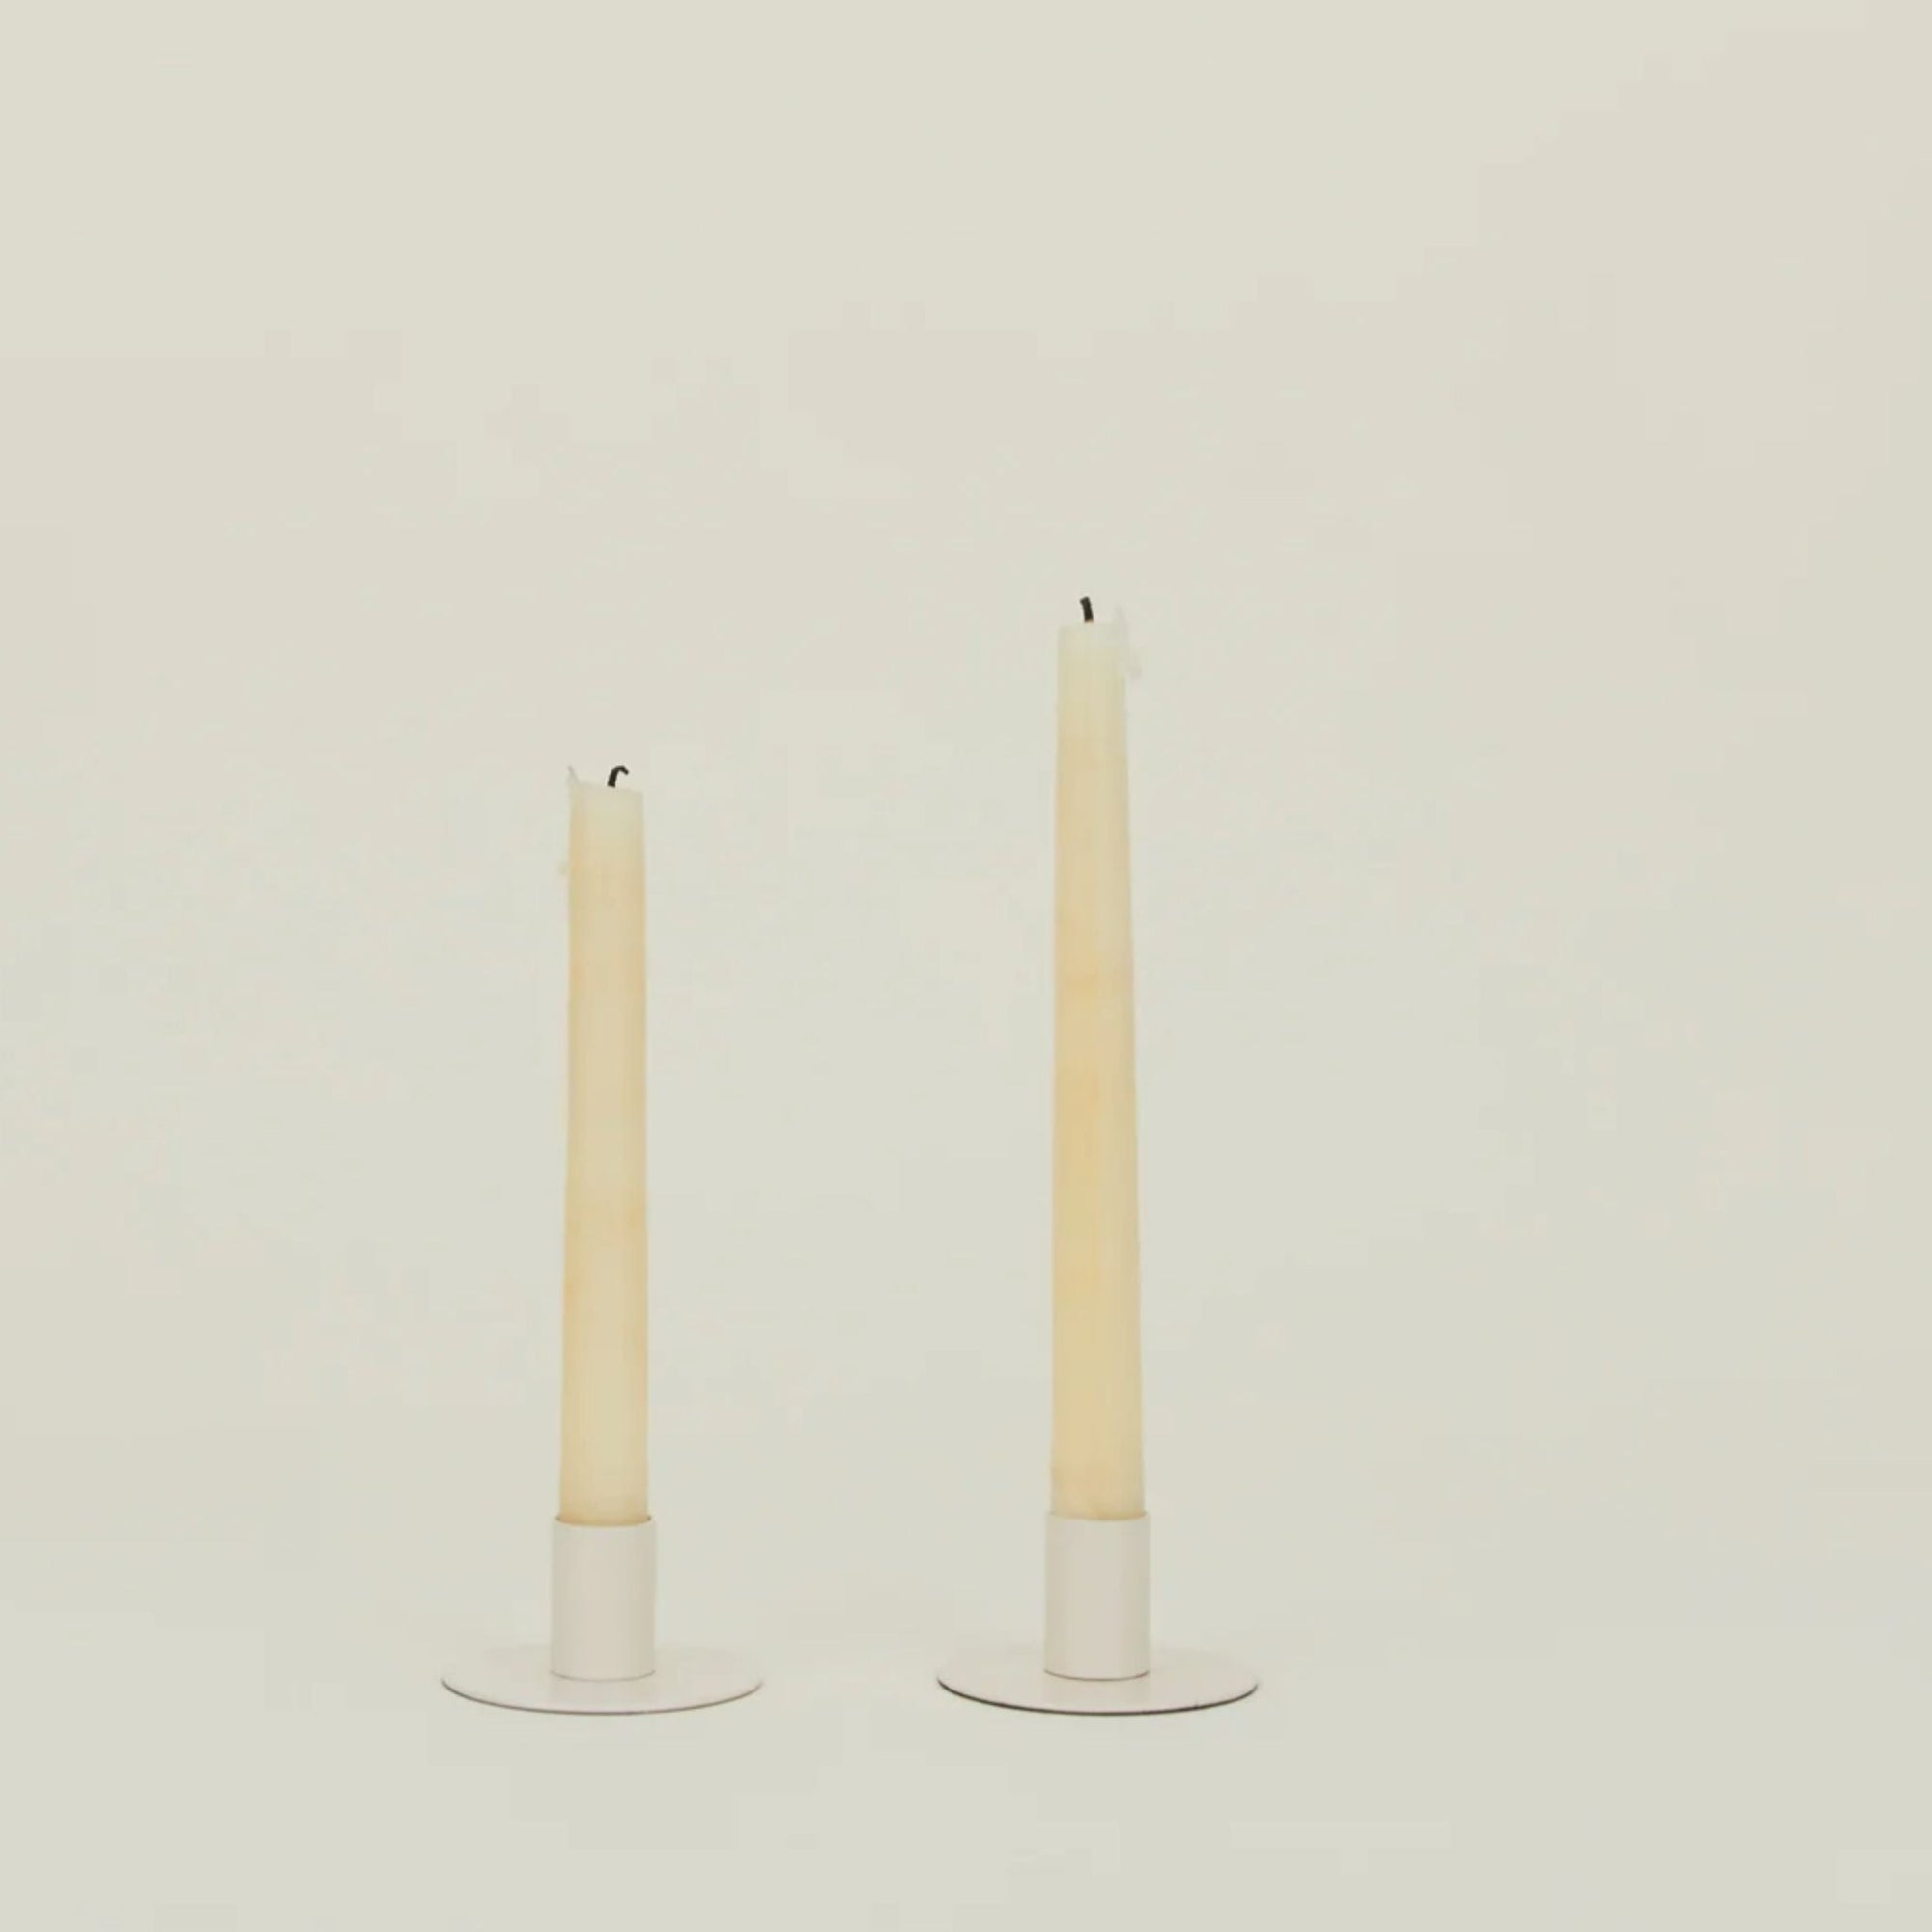 Essential Metal Candle Holders, Set of 2-Black